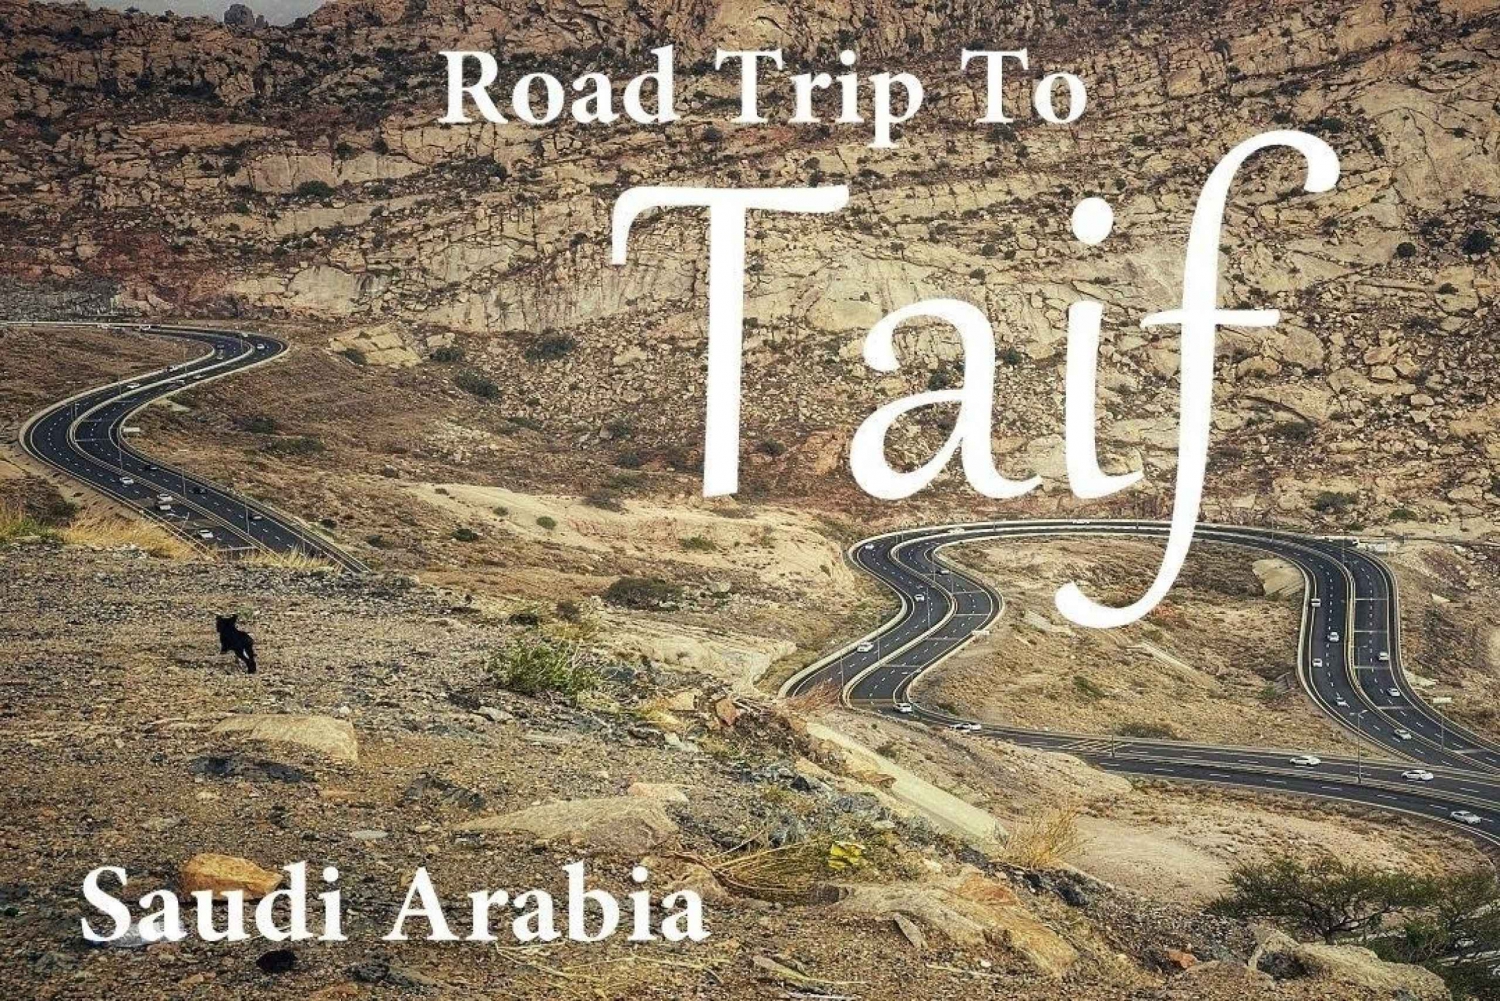 Arabia Saudí: Tour de la ciudad de Taif